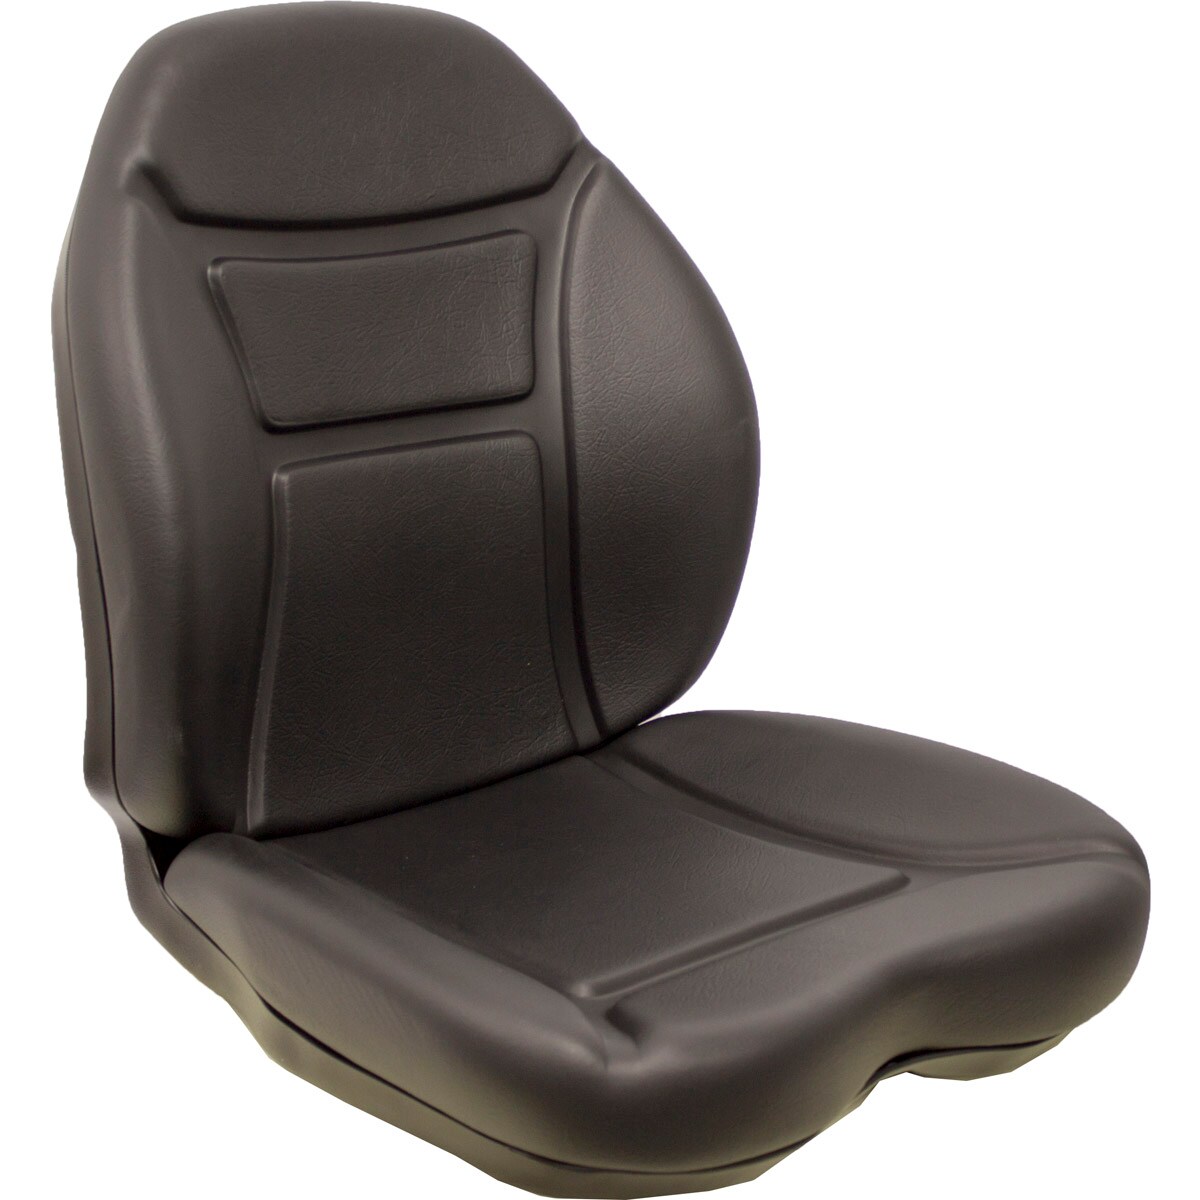 KM 1054 Seat Cushion with Cutout